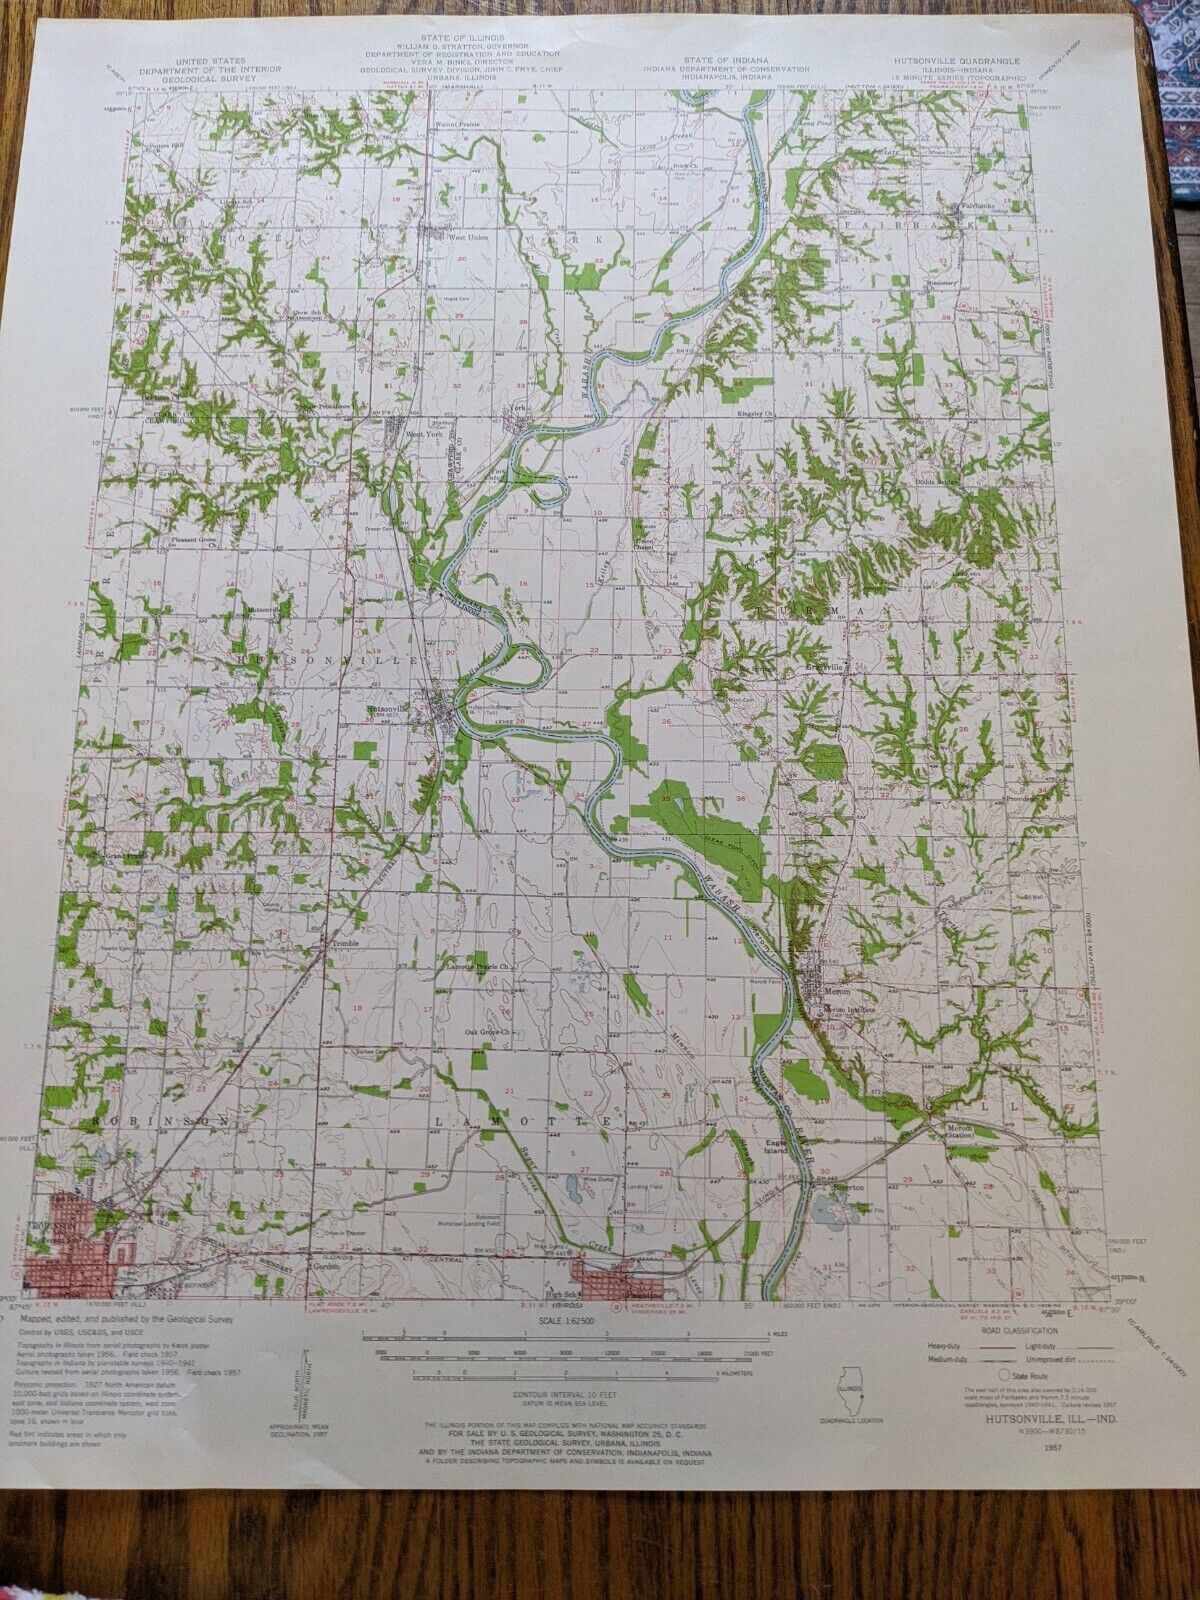 1958 ILL-IND HUTSONVILLE QUADRANGLE US Dept Interior Geological Survey Map VTG